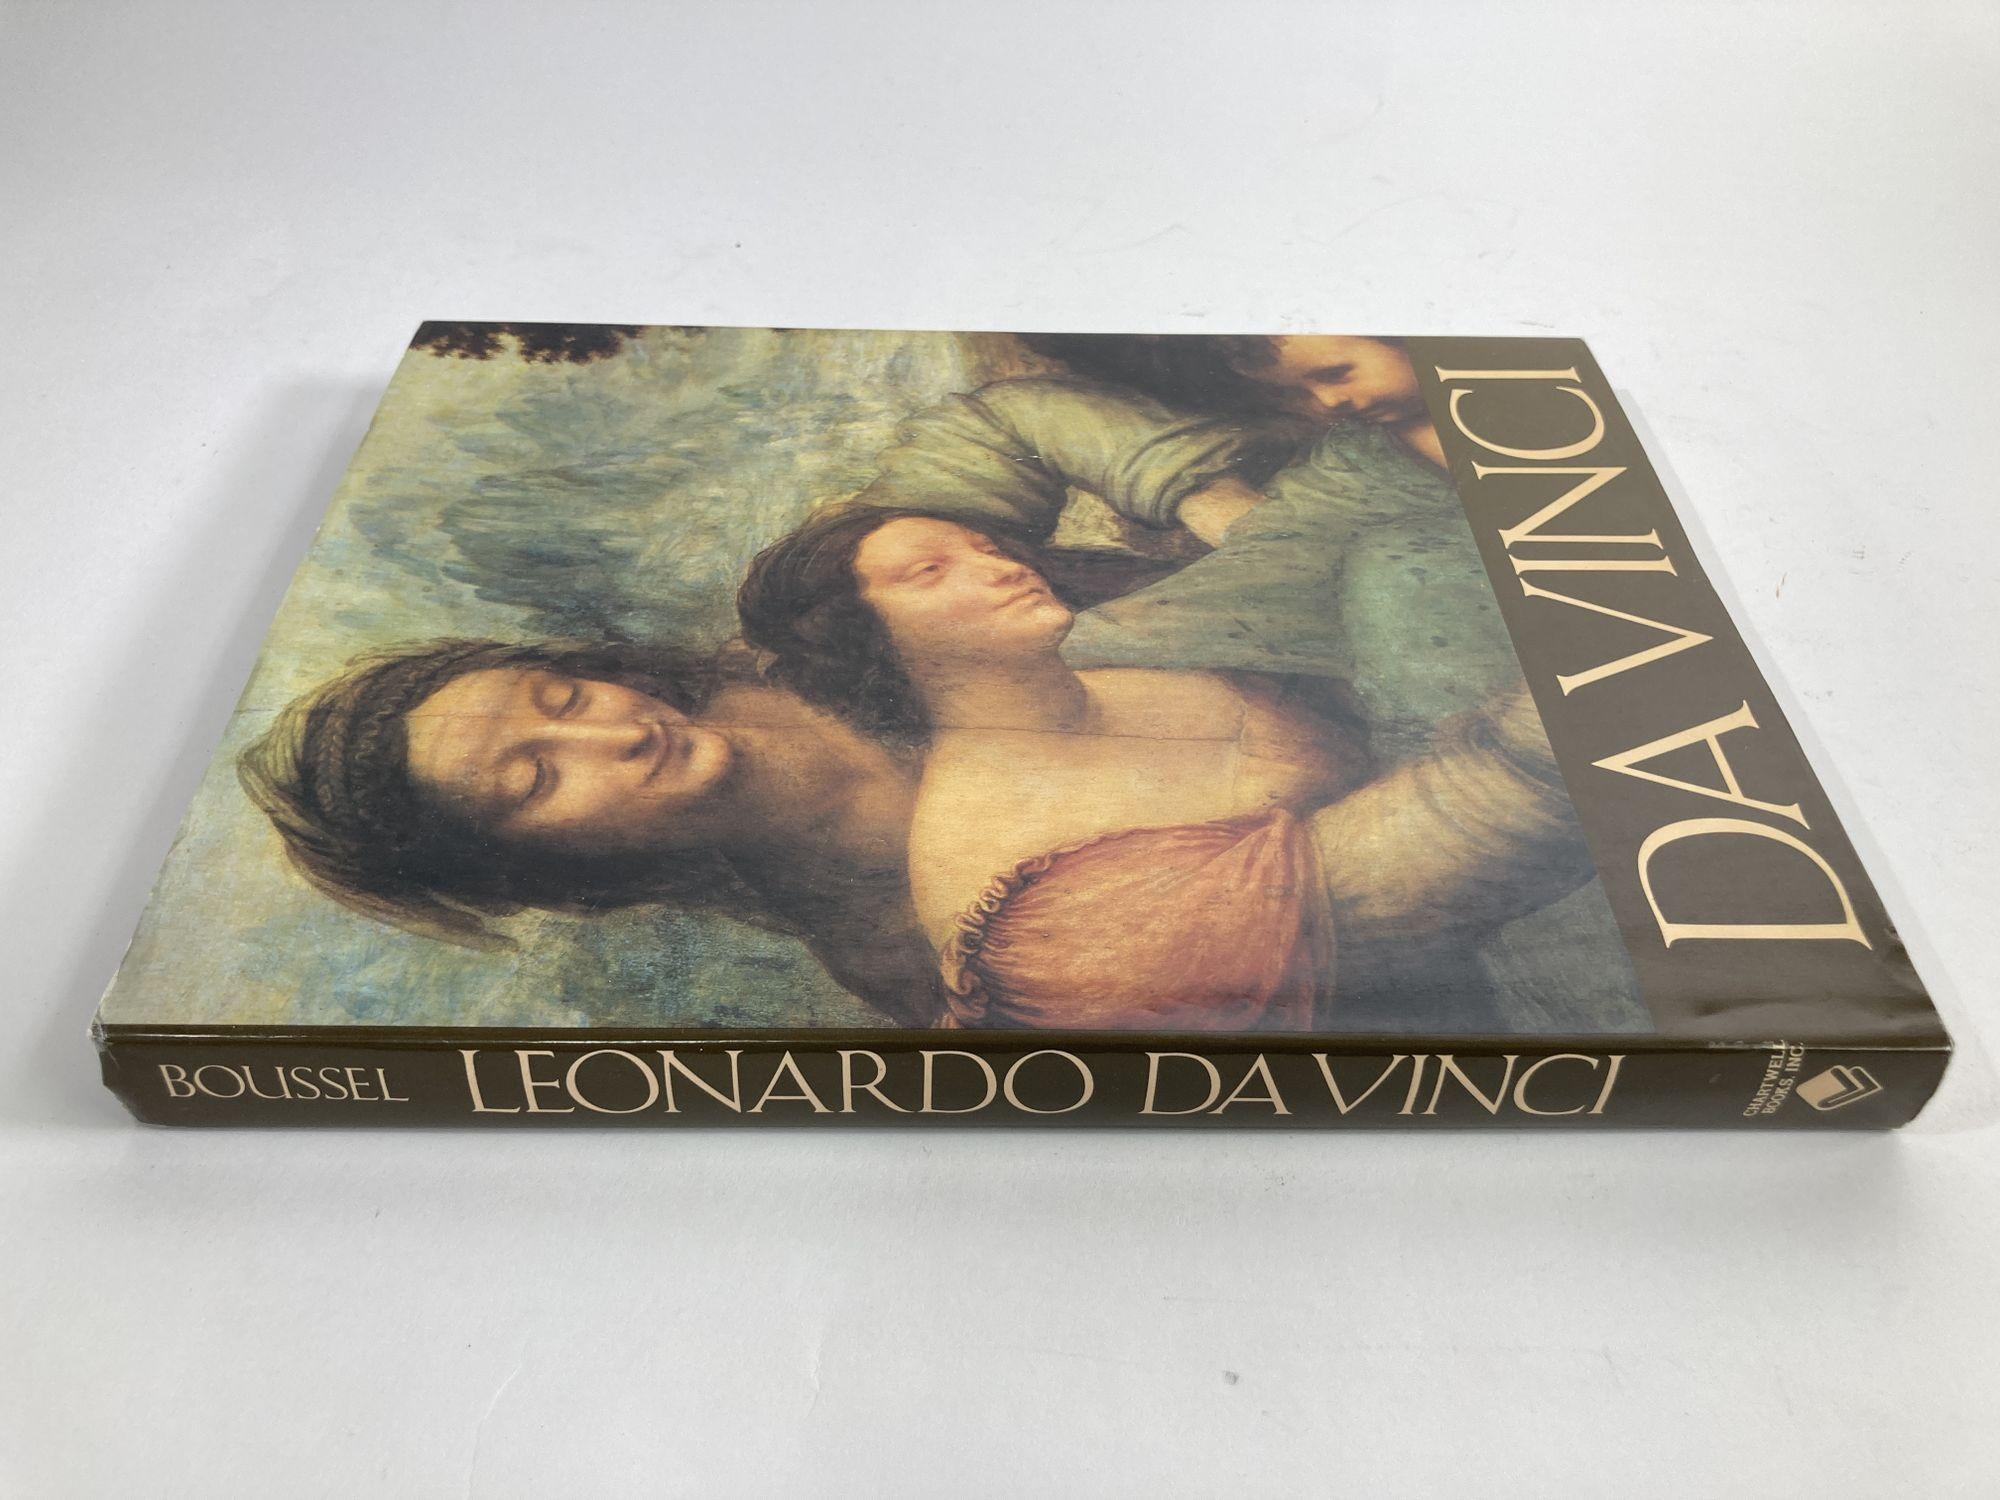 French Leonardo Da Vinci Hardcover Book by Patrice Boussel For Sale